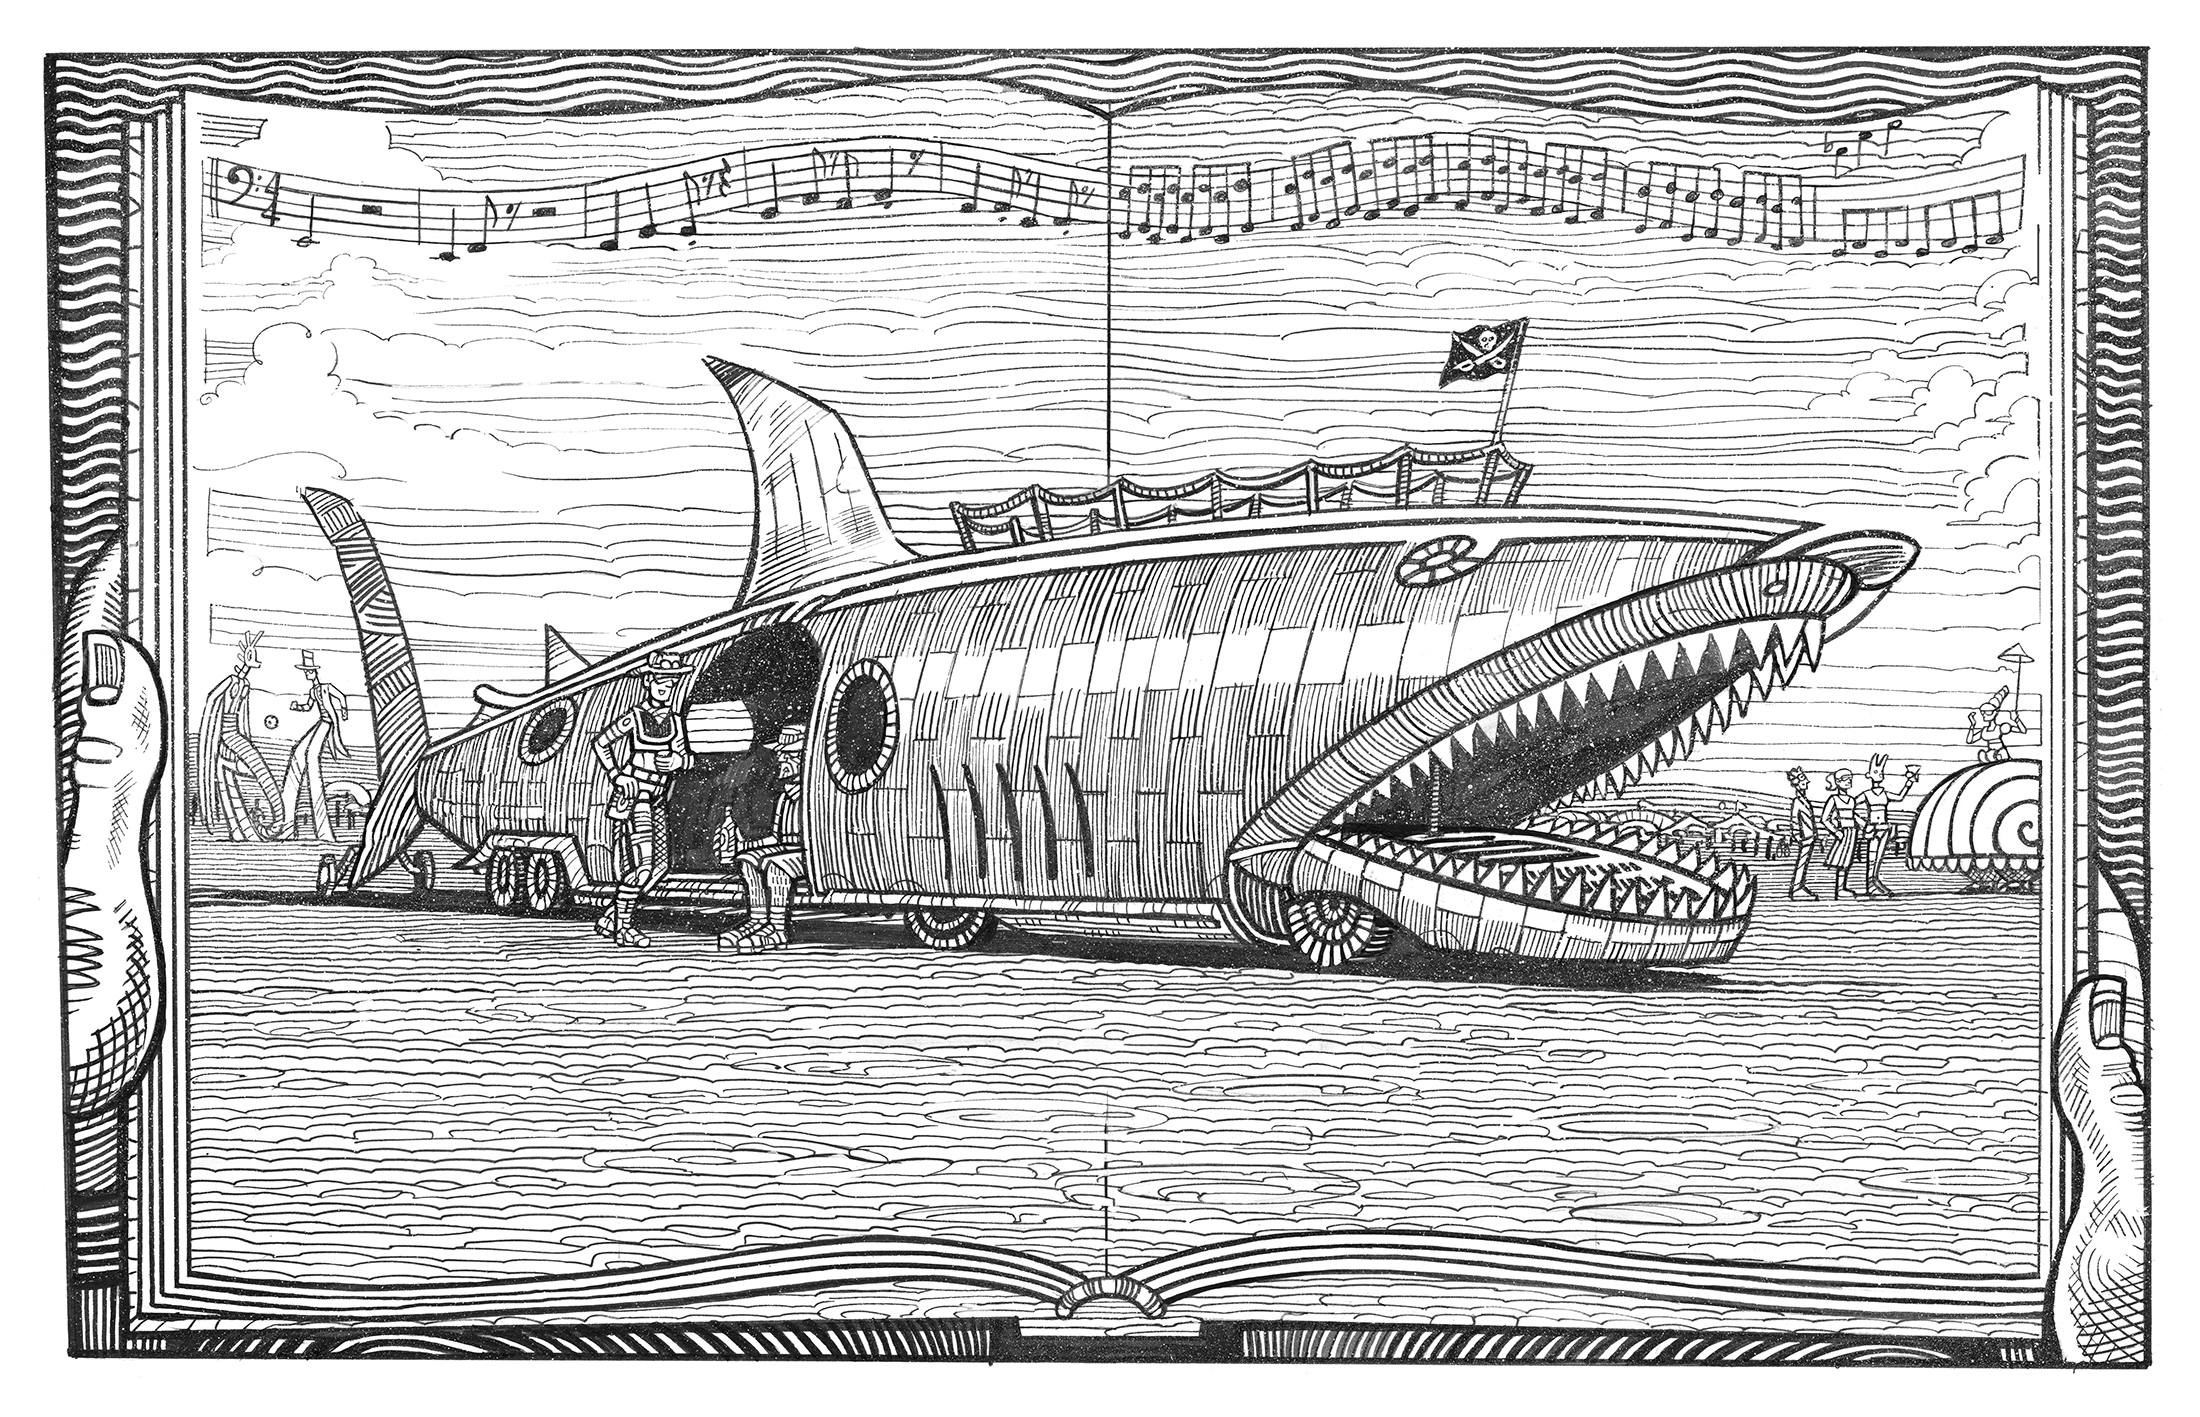 210: Land Shark